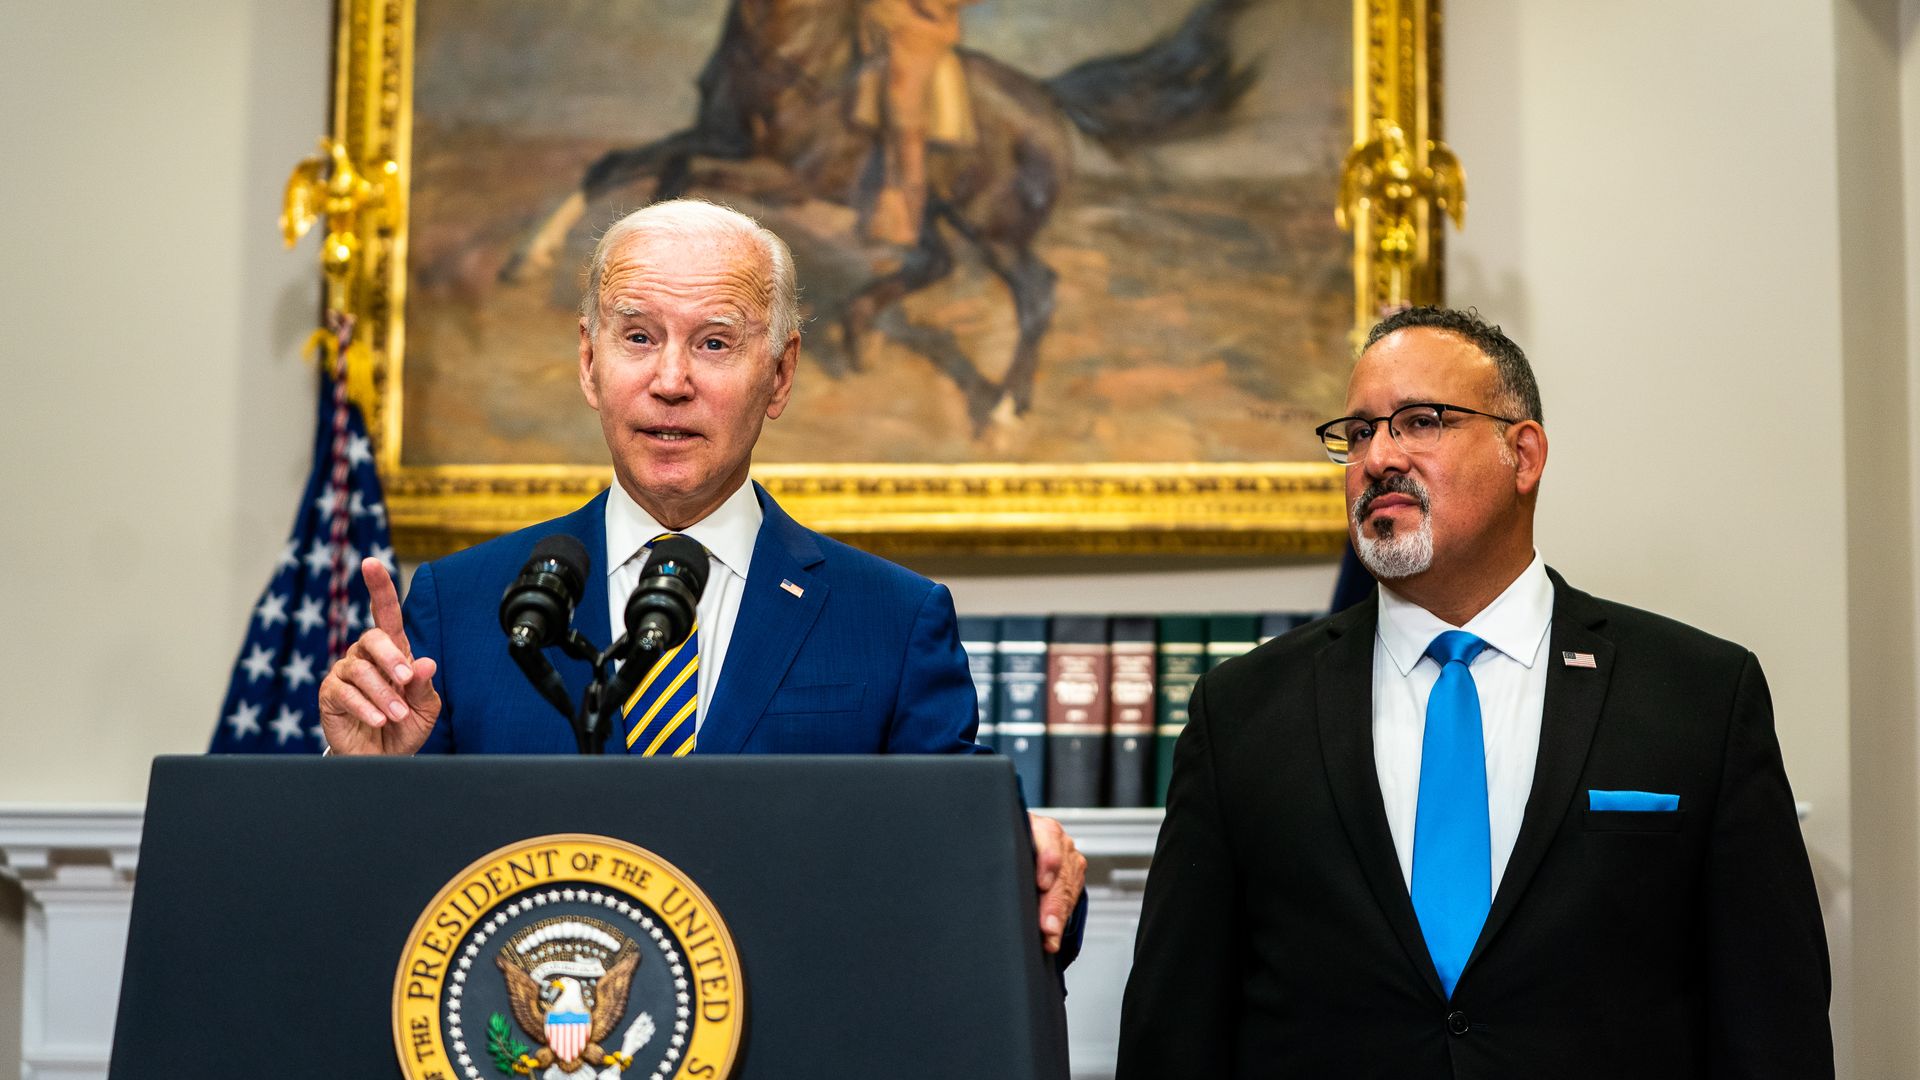 President Joe Biden delivers remarks regarding student loan debt forgiveness in the Roosevelt Room of the White House on Wednesday August 24, 2022